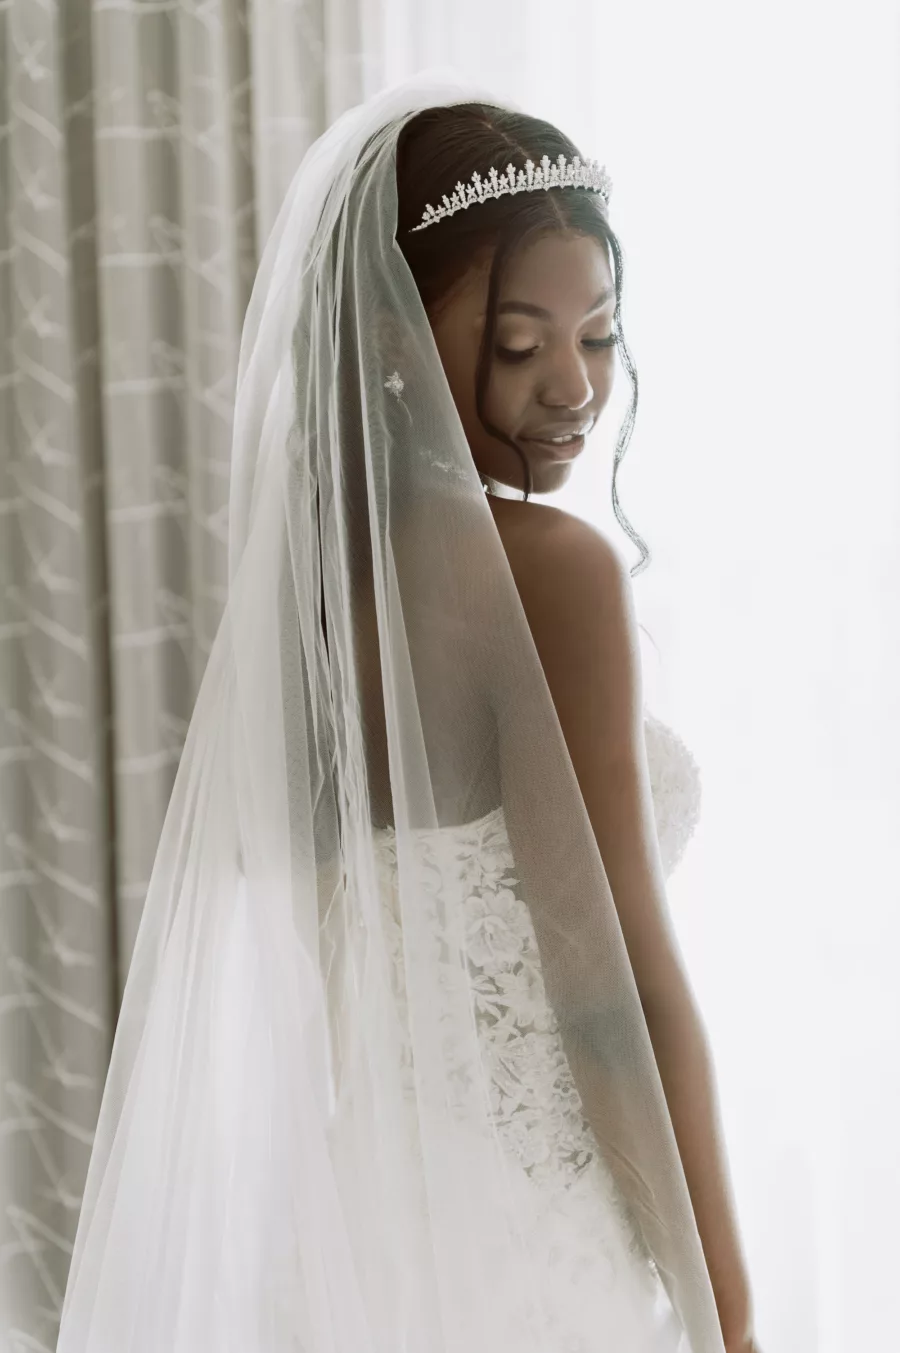 Bride Getting Ready Wedding Portrait | Elegant Diamond Tiara Ideas | White Strapless Lace Fit and Flare Wedding Dress Inspiration